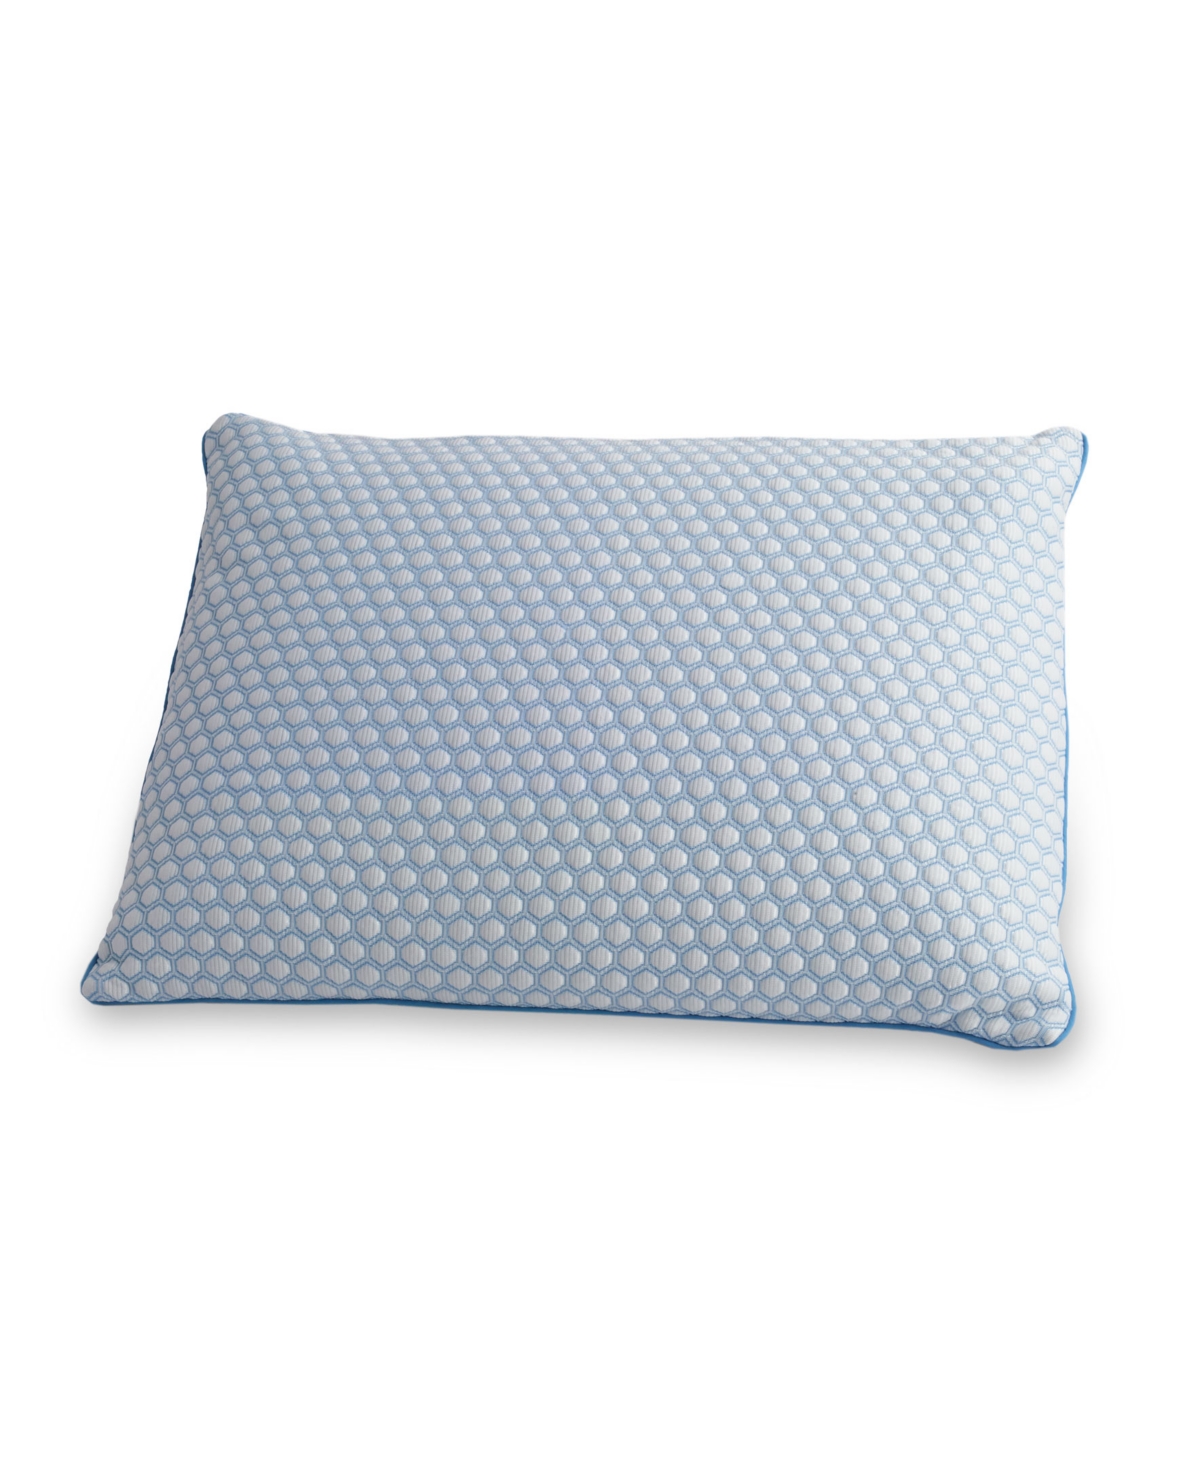 Trucool Serene Foam Traditional Pillow, Standard/queen In Multi